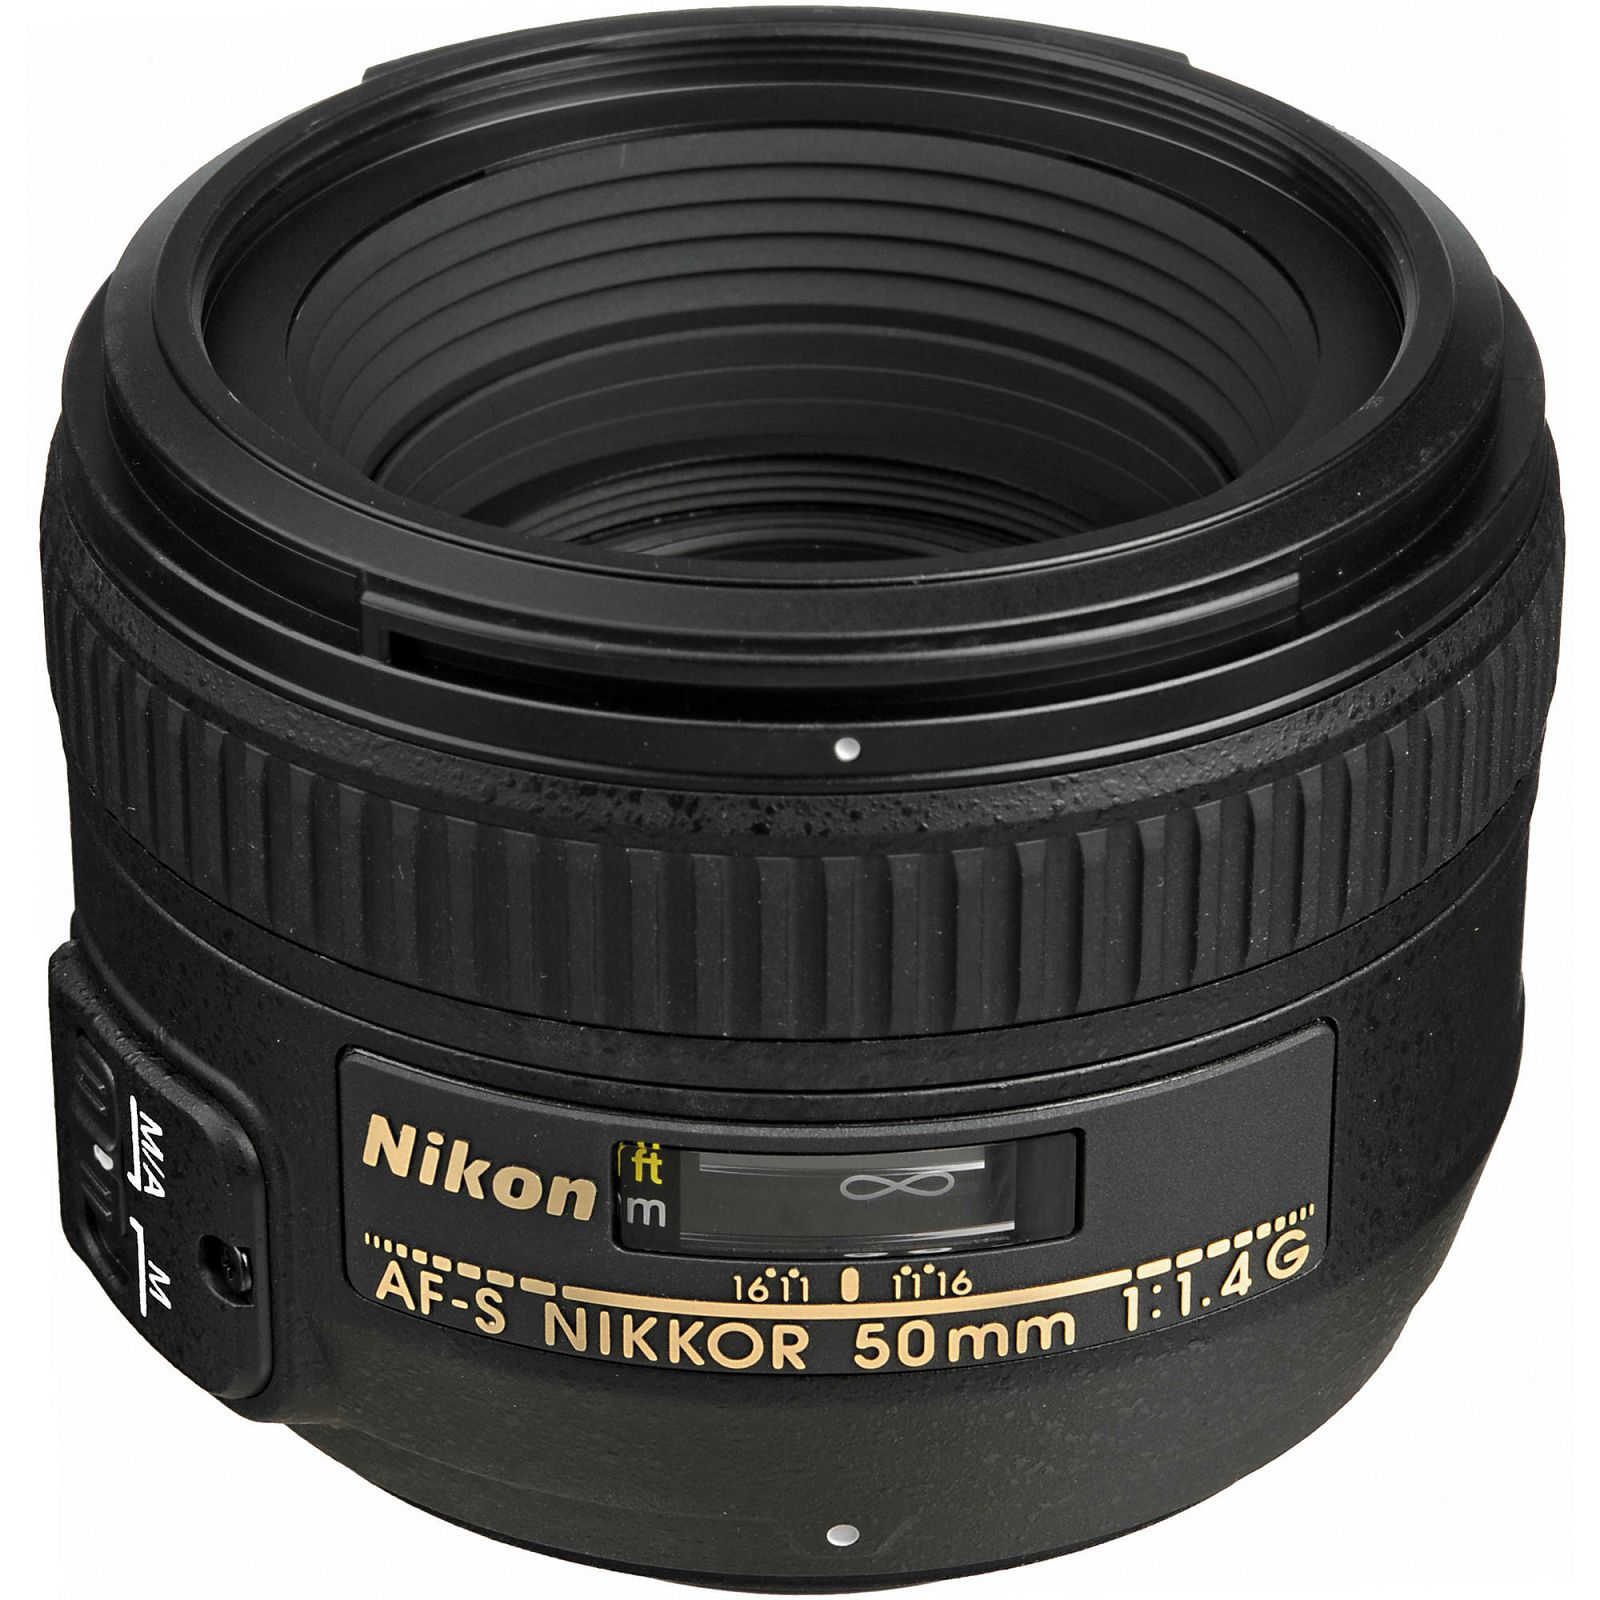 Nikon AF-S 50mm f/1.4G FX standardni objektiv fiksne žarišne duljine